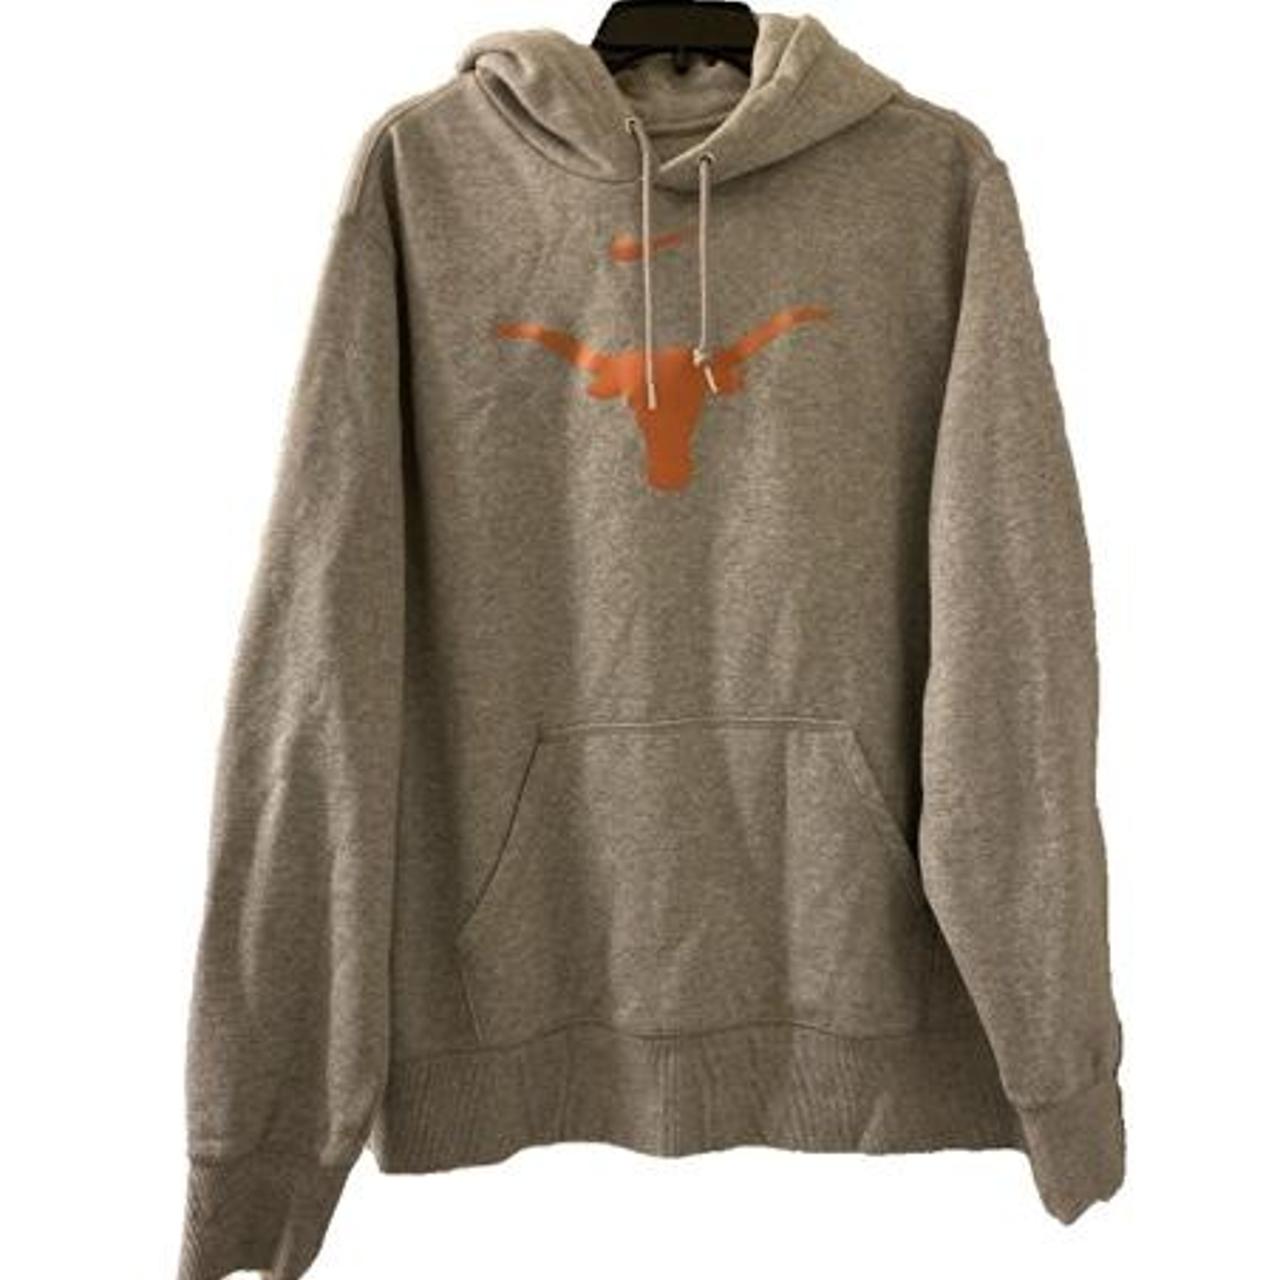 ash grey Nike Texas Longhorns hoodie with reflective... - Depop